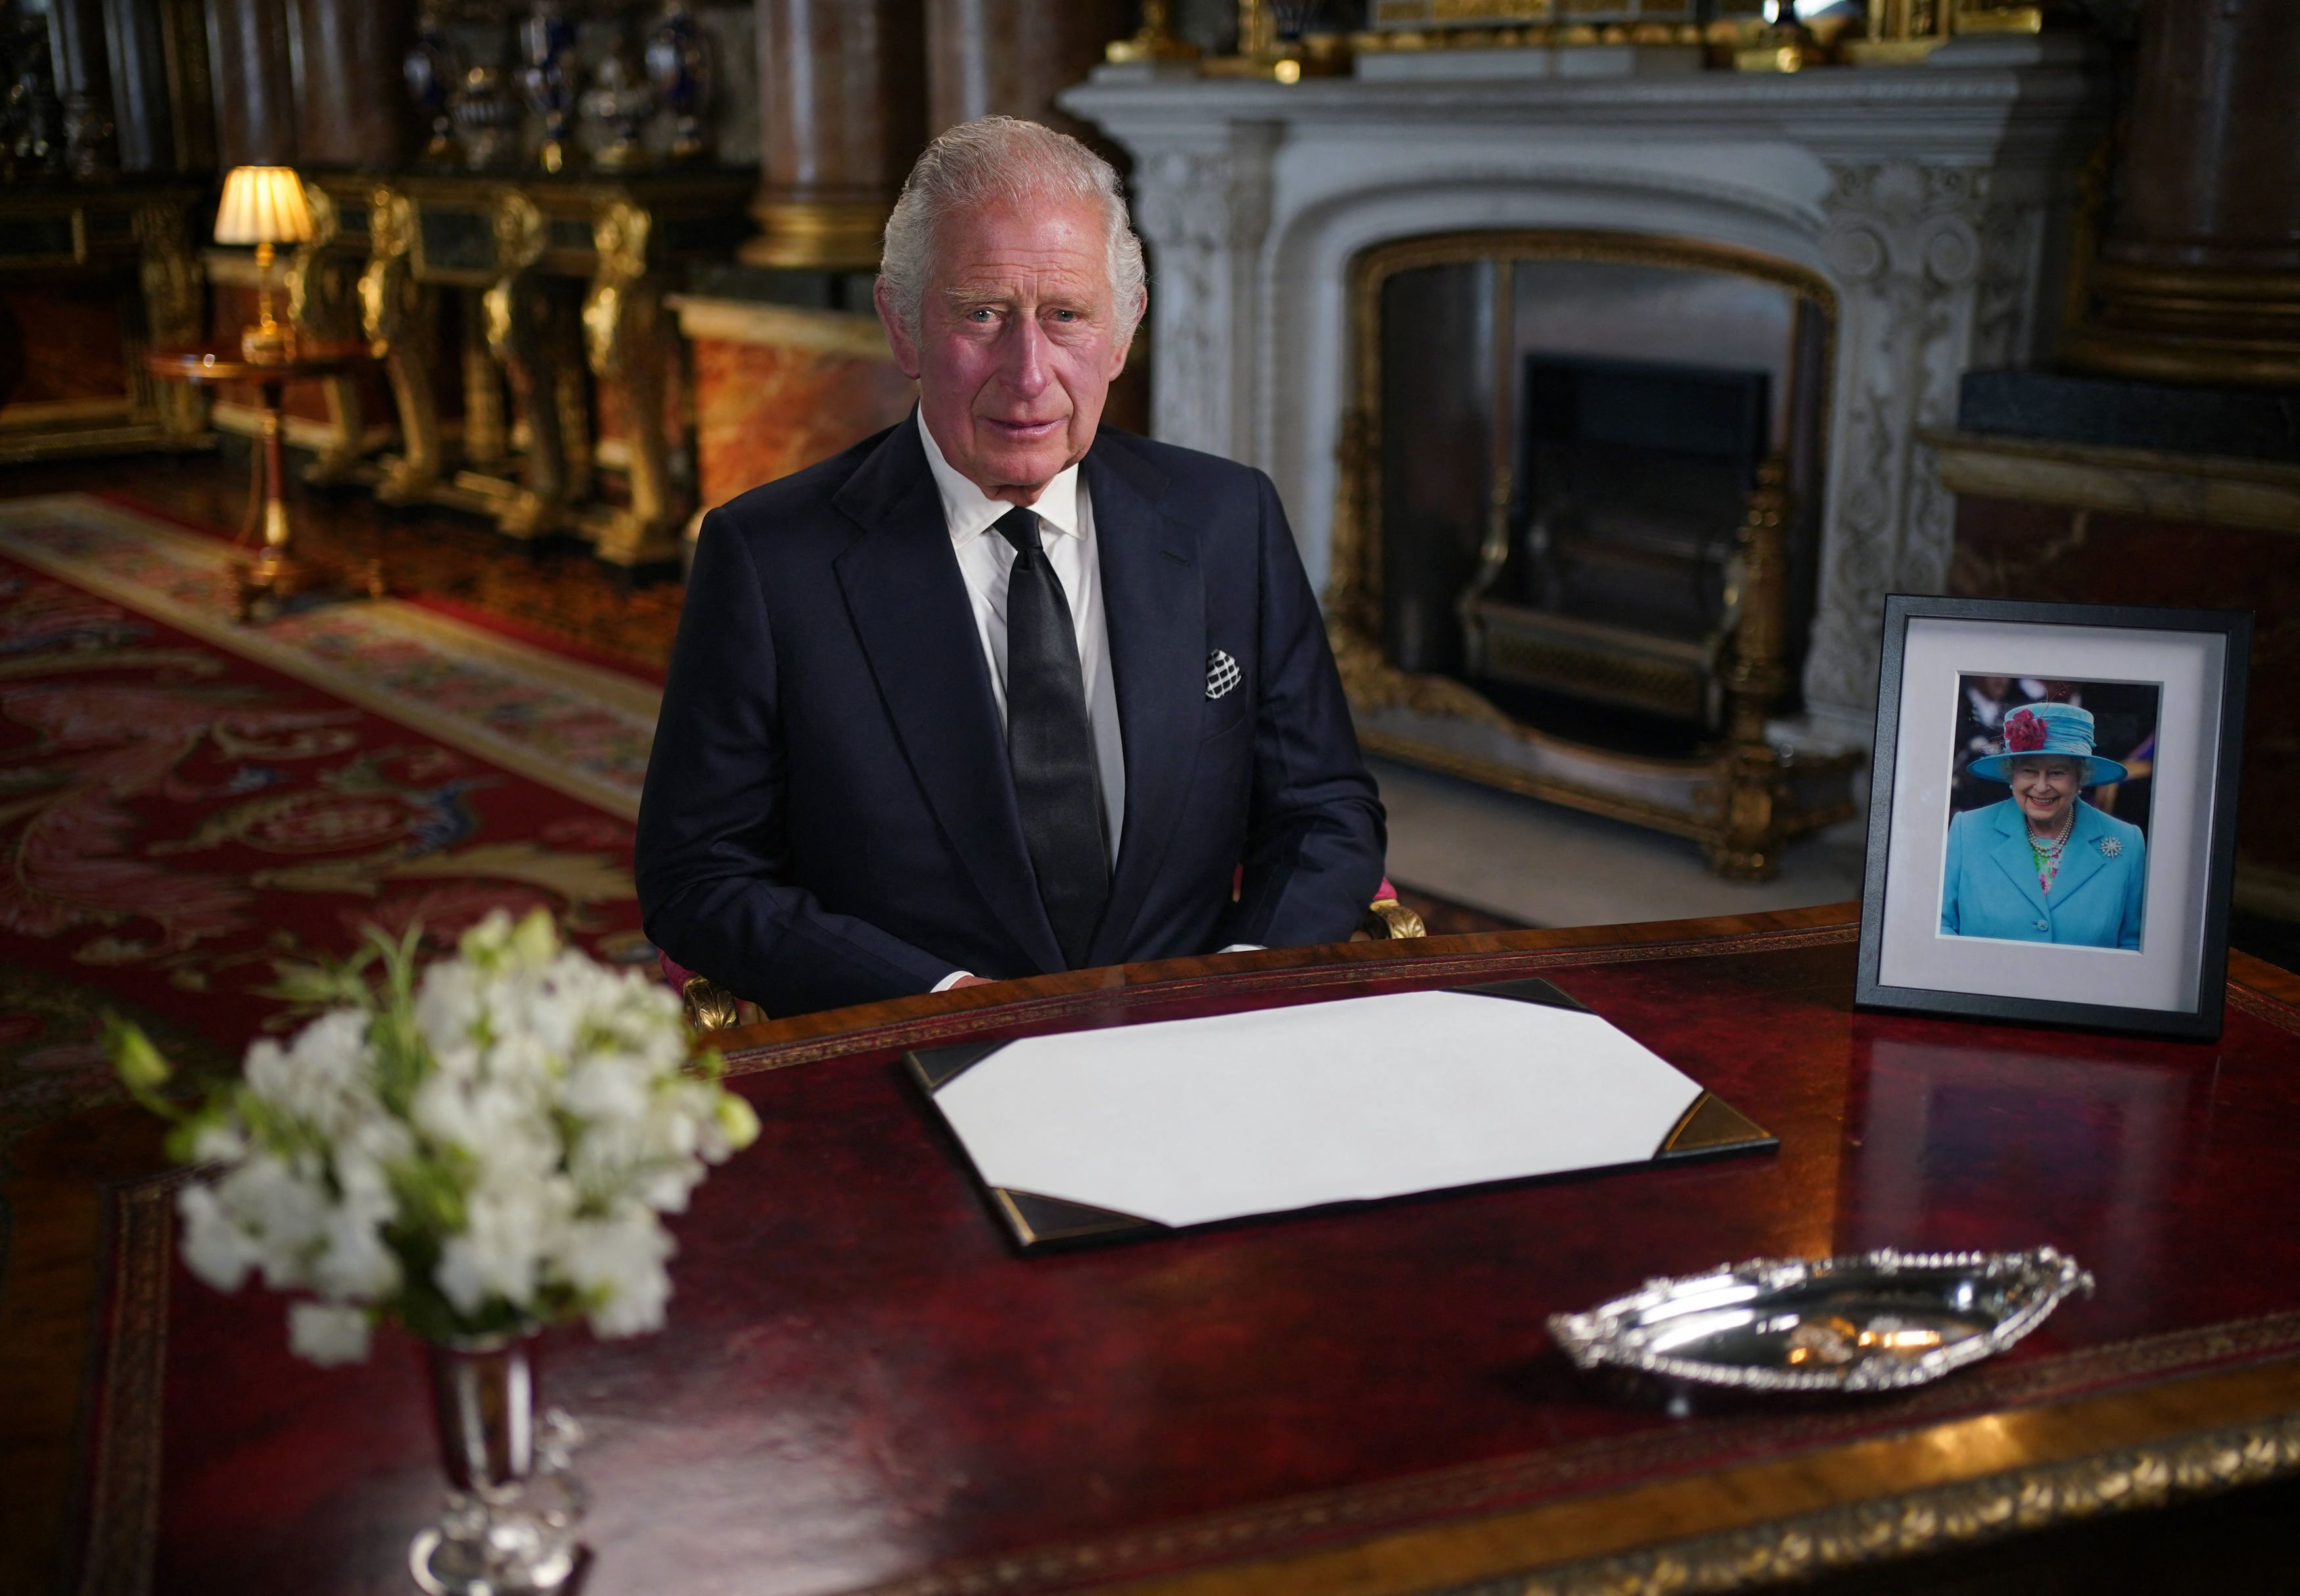 Bank holiday for King Charles III coronation, says UK PM Rishi Sunak